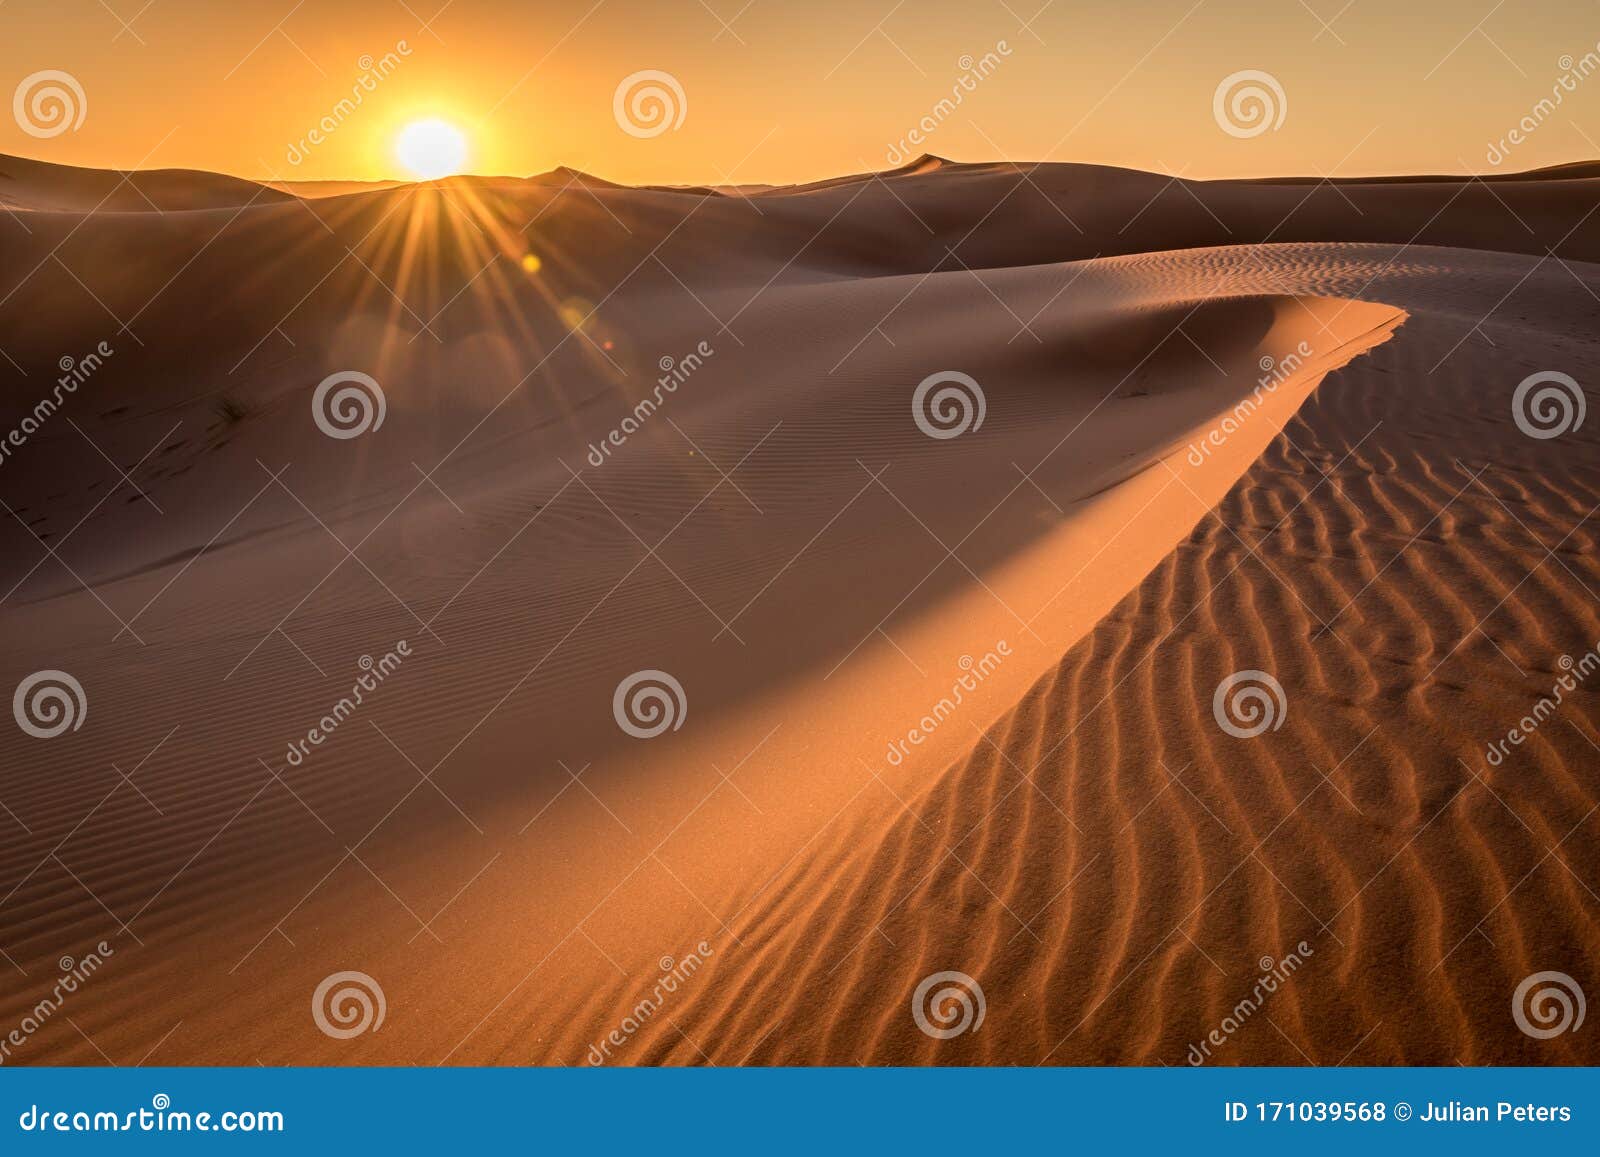 sunrise over the sahara dunes, merzouga, morocco